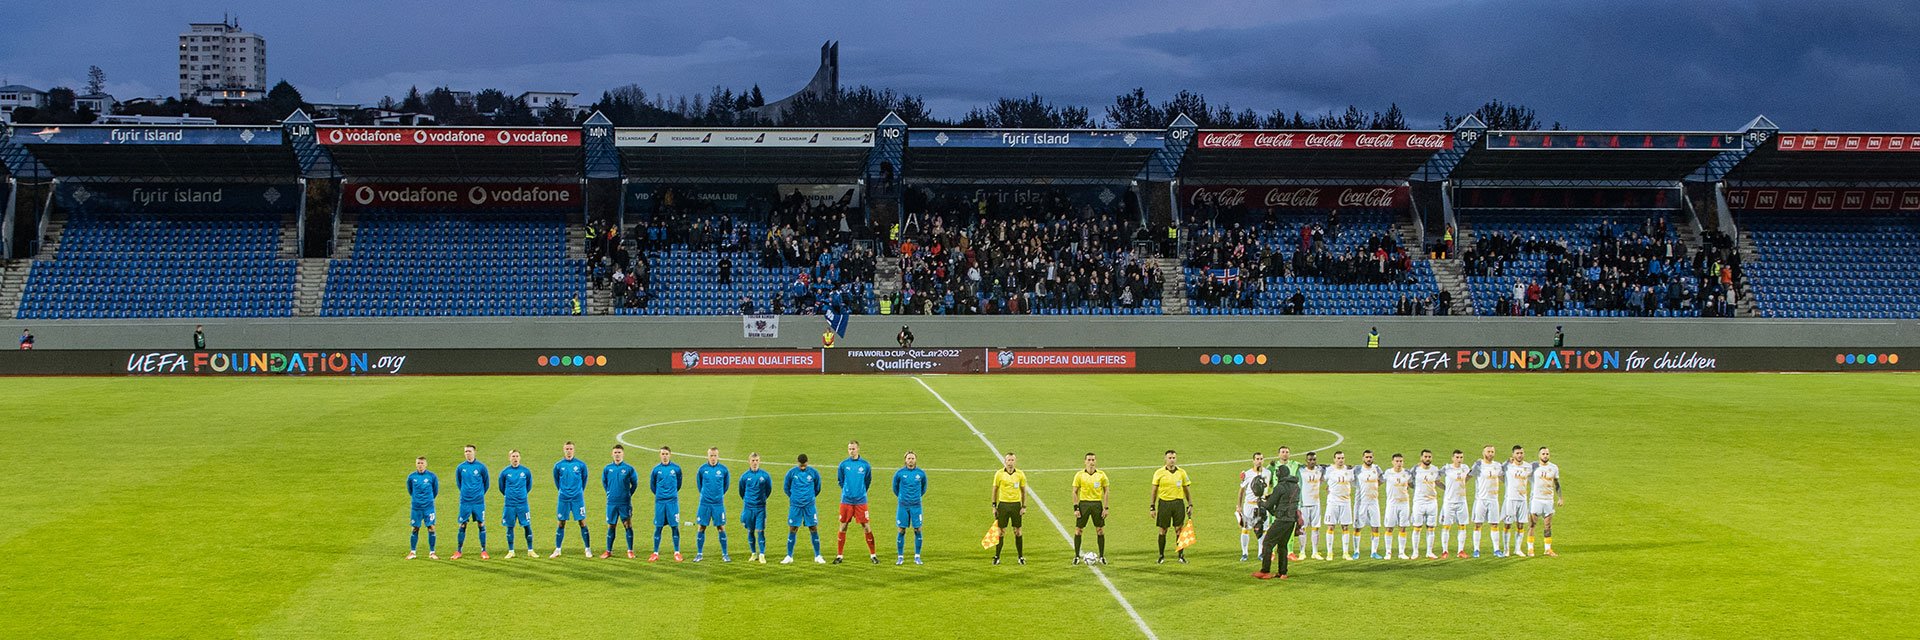 2021_Futbol_Iceland_01.jpg